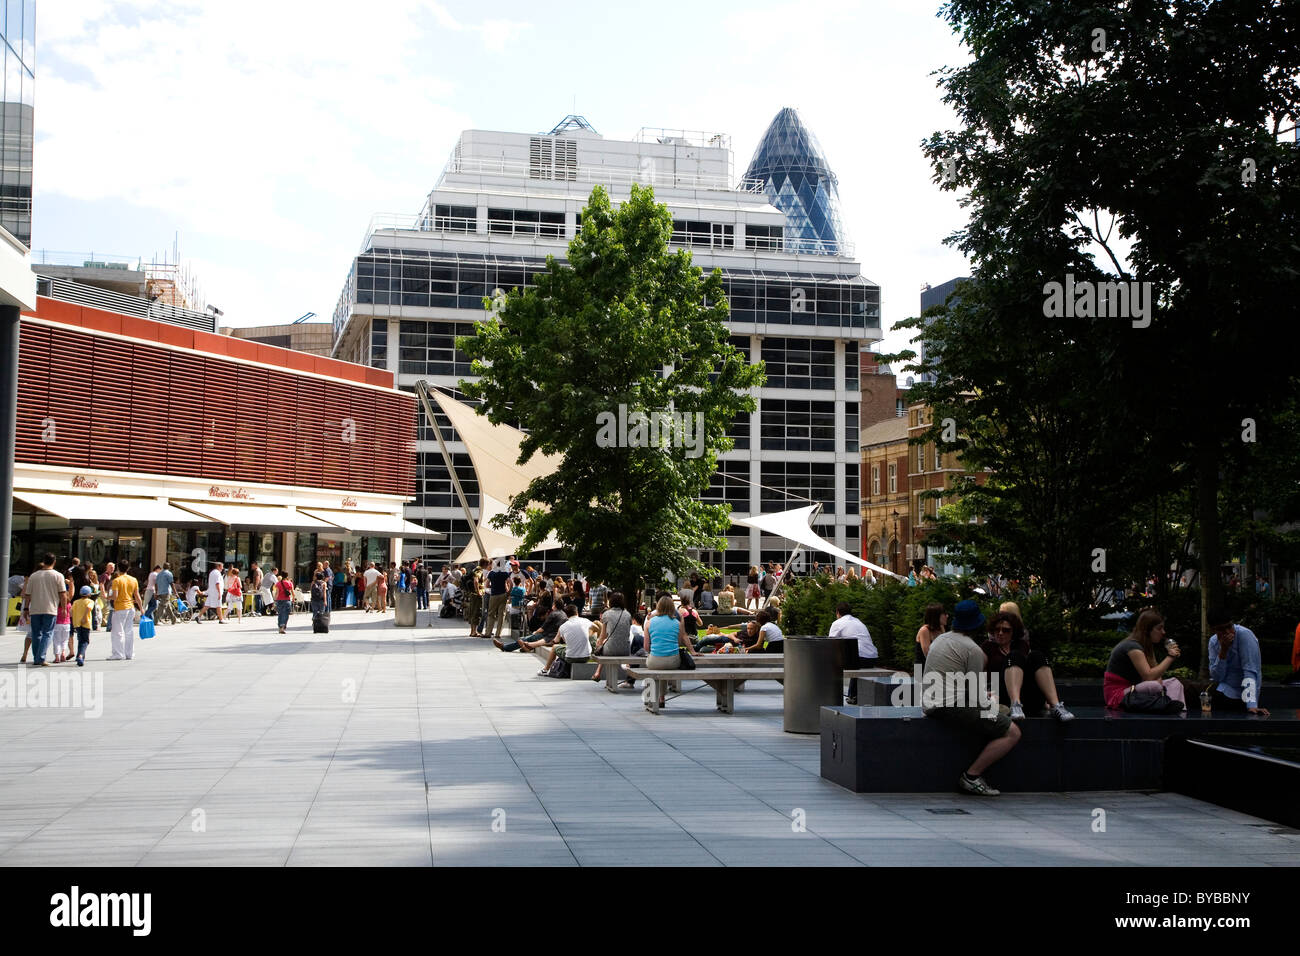 Spitalfields, East London area of regeneration. Stock Photo